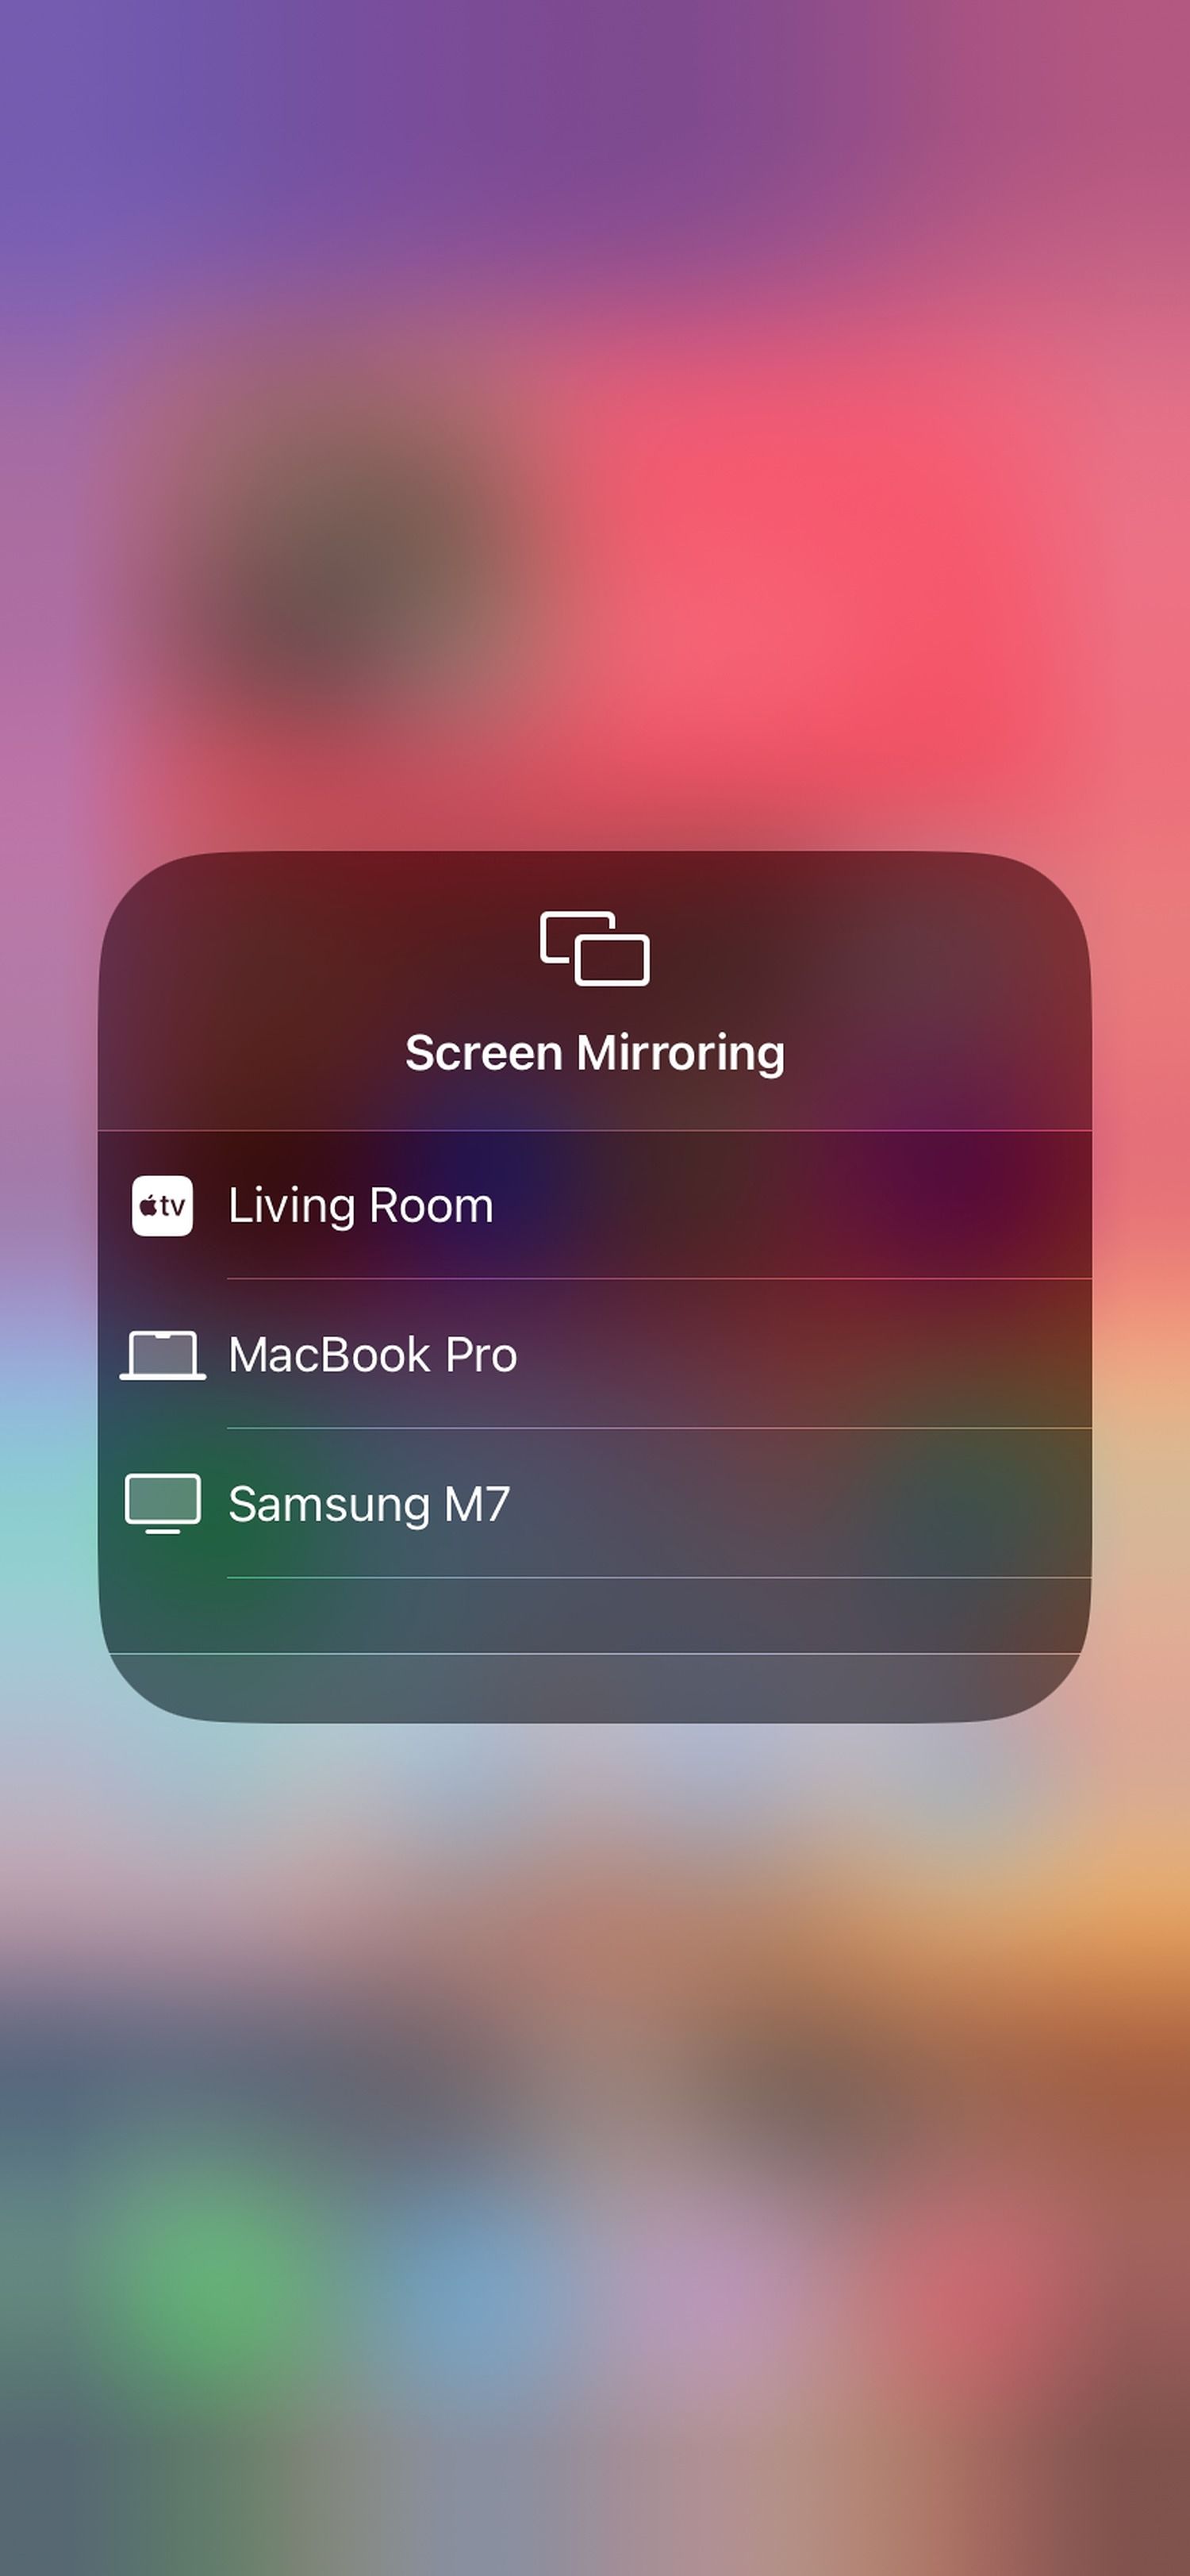 screen mirroring on iPhone